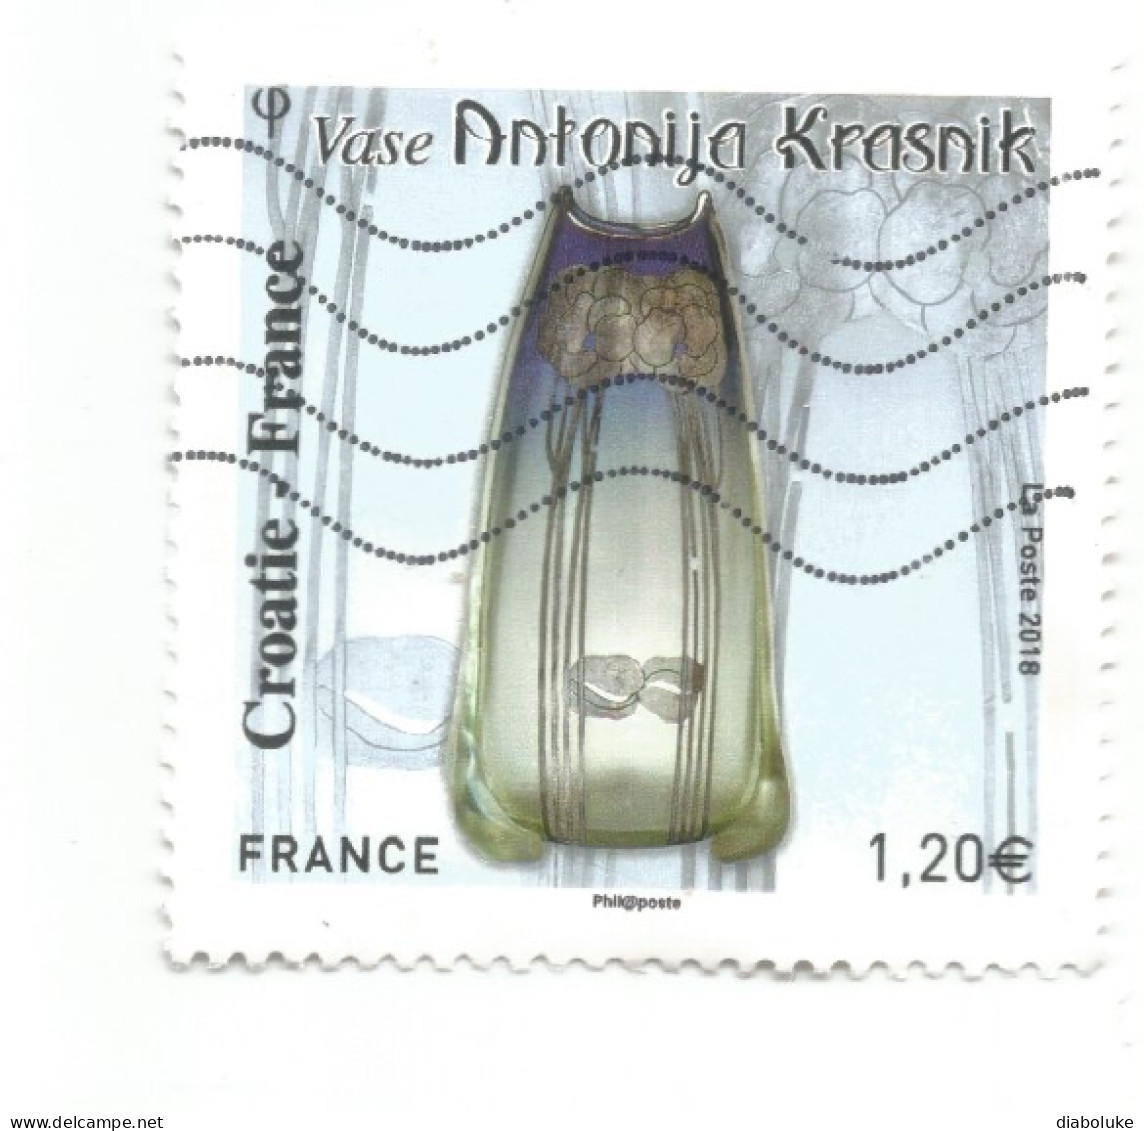 (JOINT ISSUE) 2018, VASE BY ANTONIJA KRASNIK - Used Stamp - Oblitérés